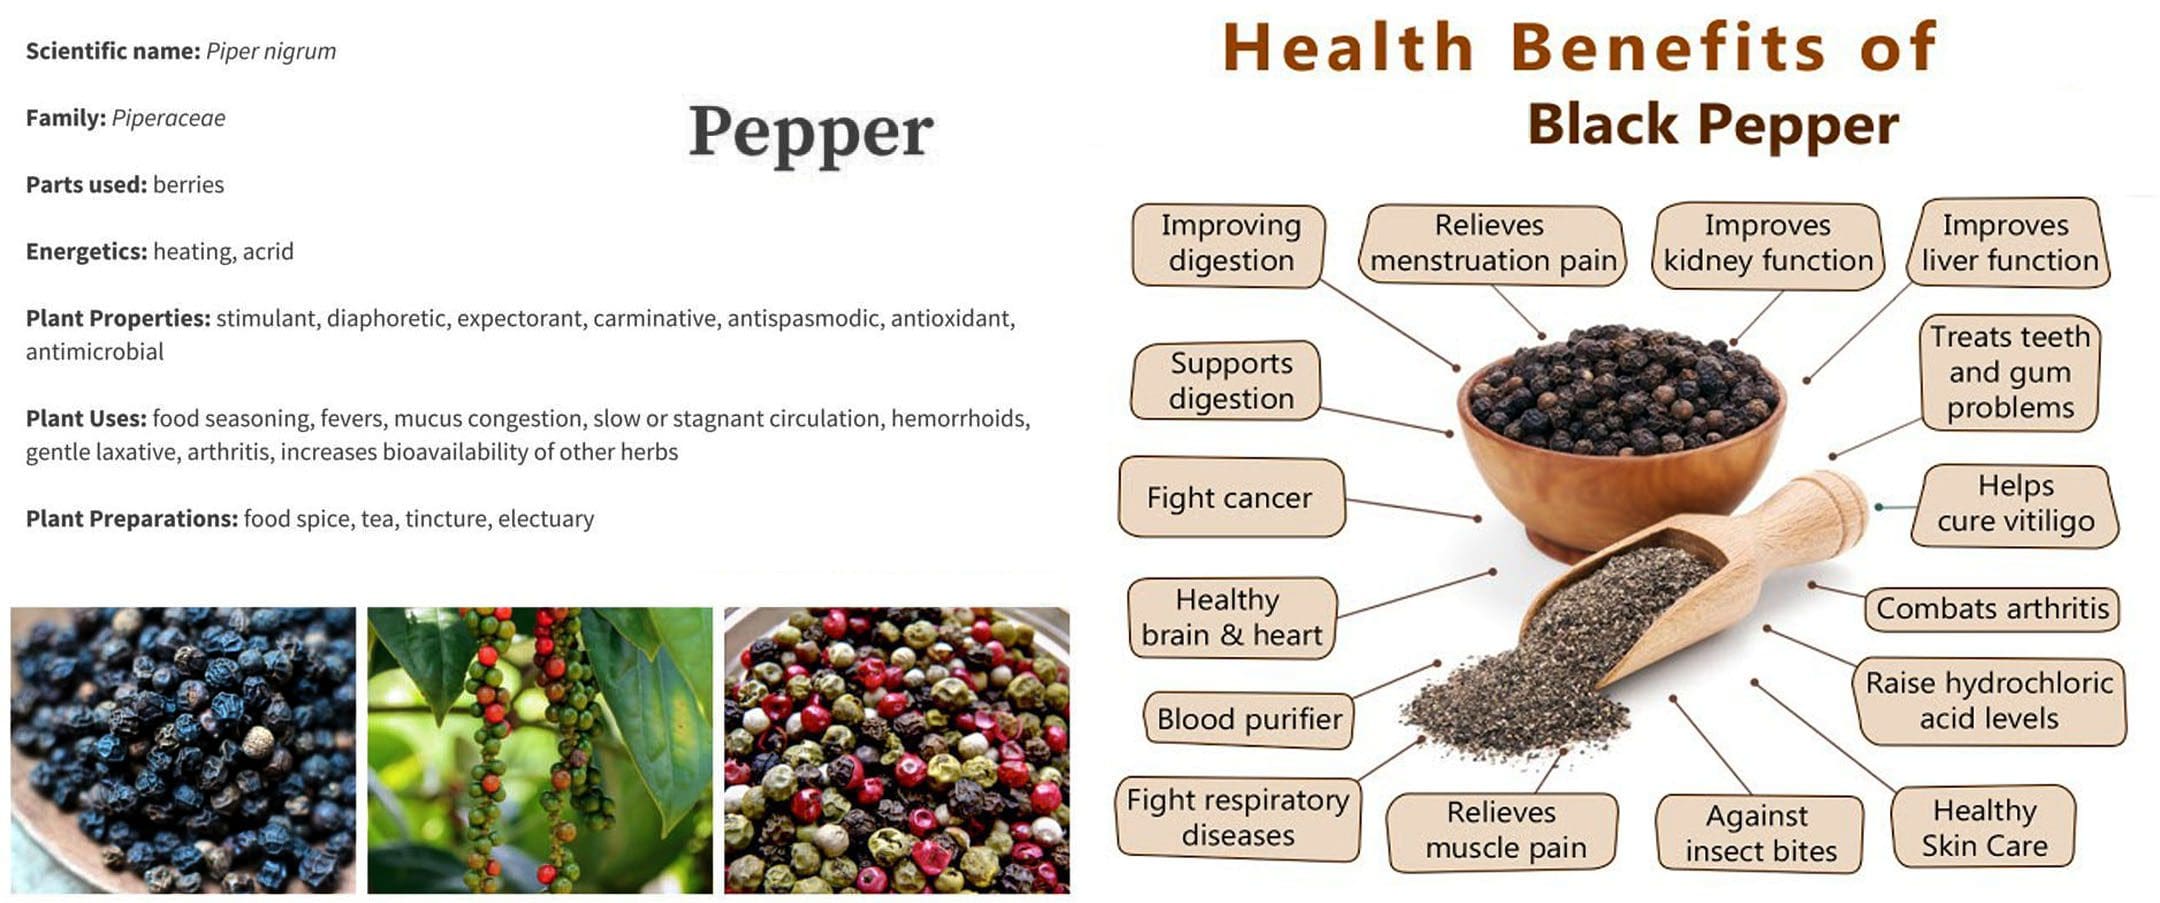 Black Pepper Health Benefits